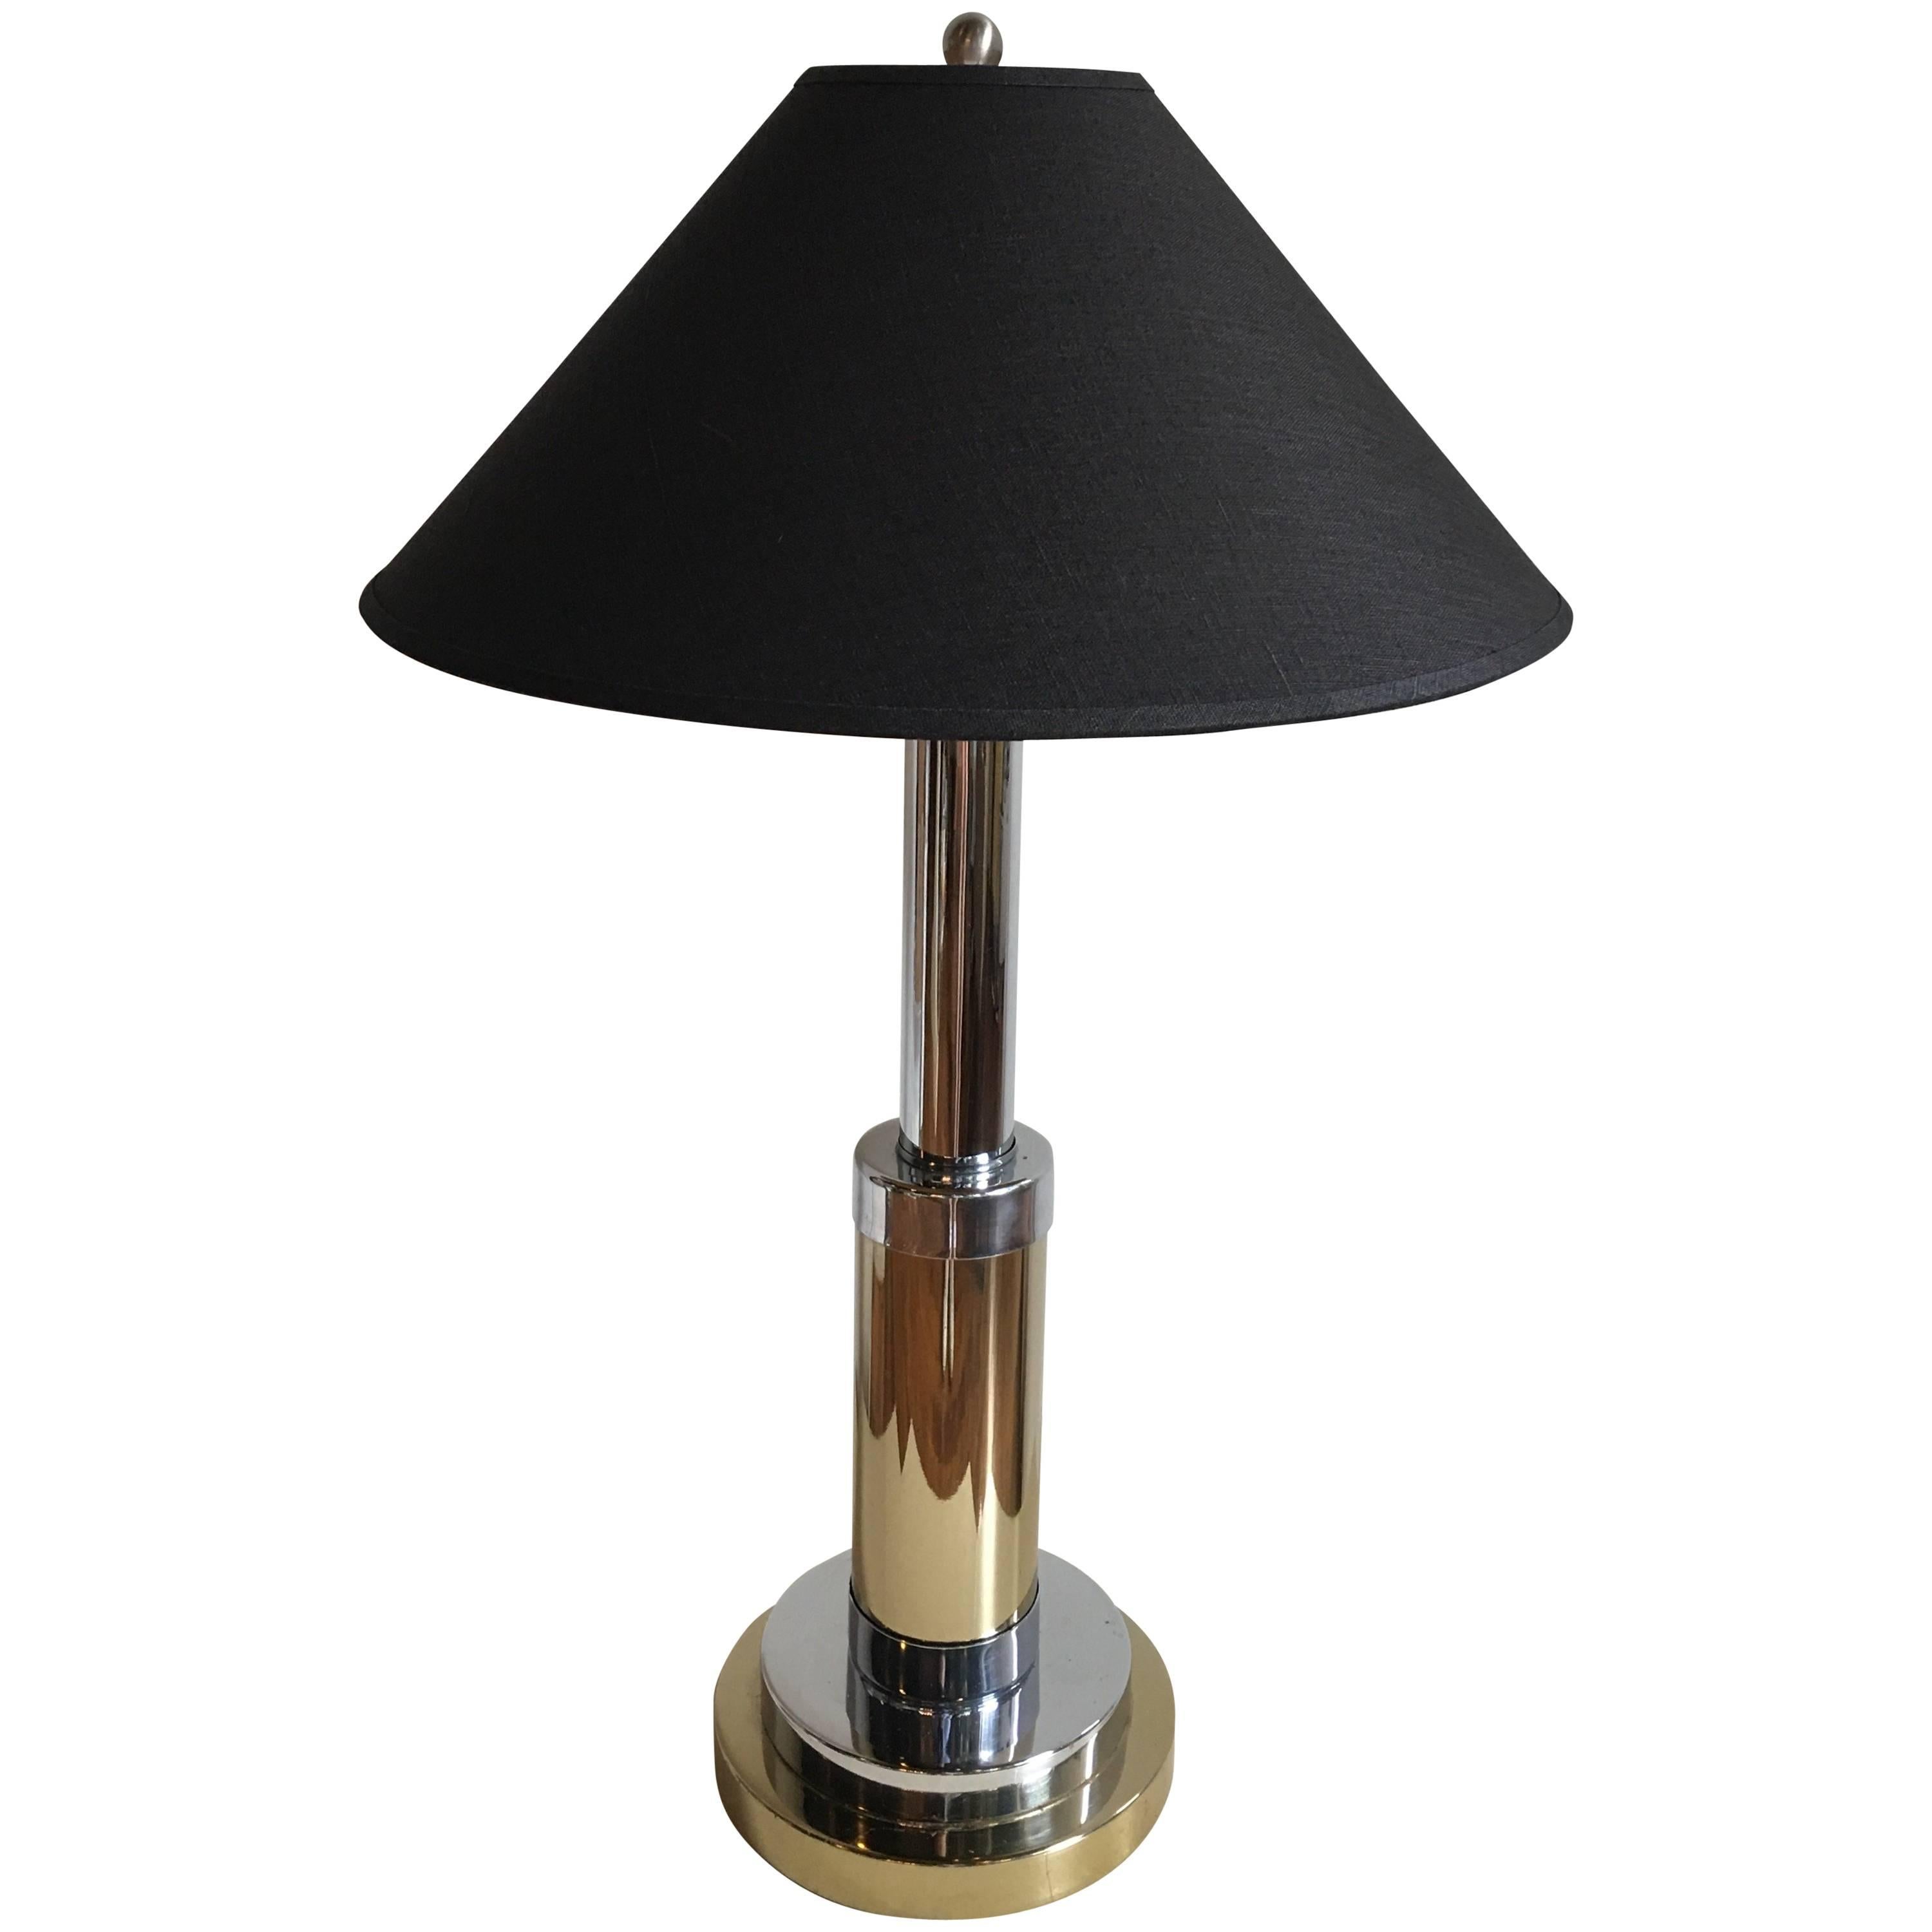 Mixed Metal Lamp by Mutual Sunset Lamp Company